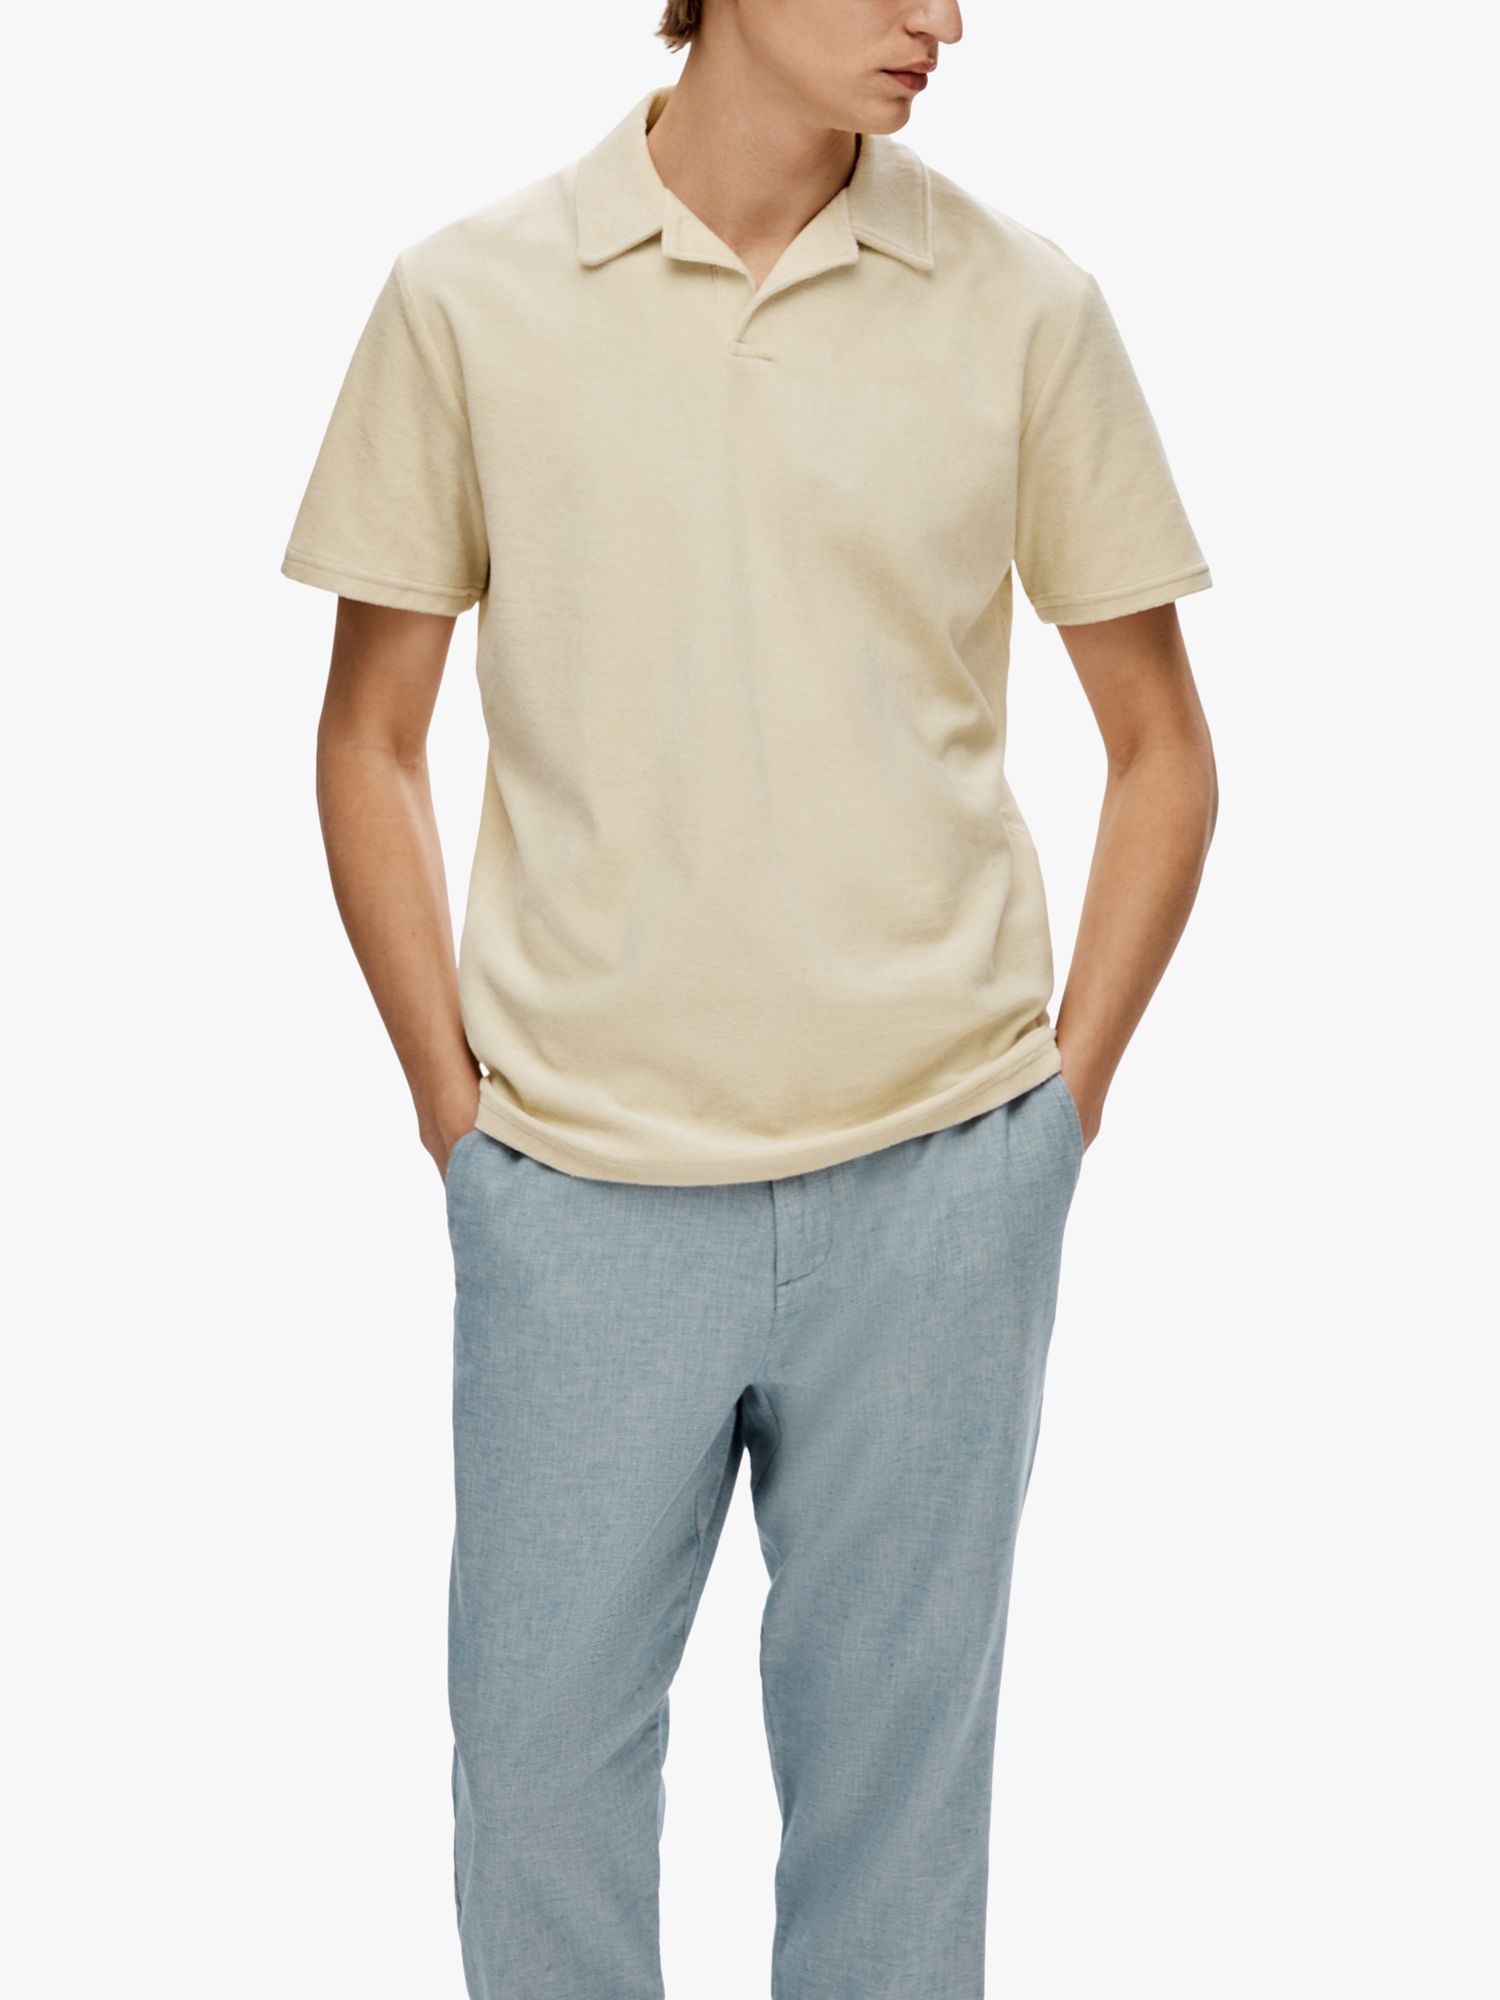 SELECTED HOMME Regular Fit Short Sleeve Polo Shirt, Fog, S